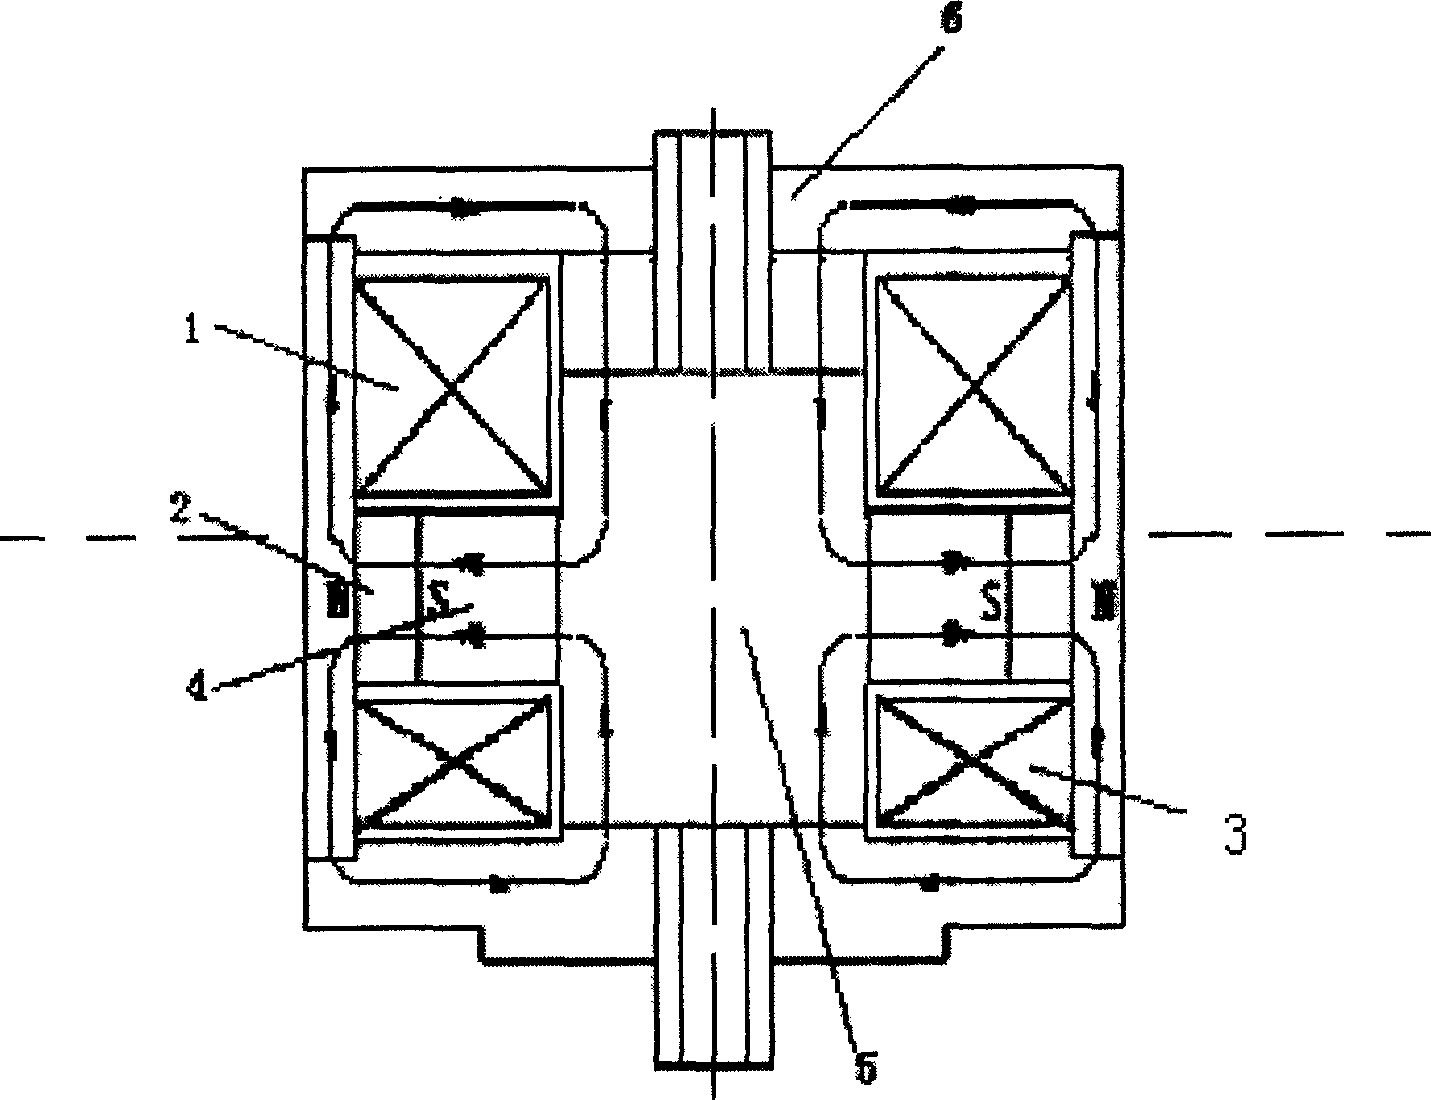 Asymmetric double coil type permanent-magnetic mechanism